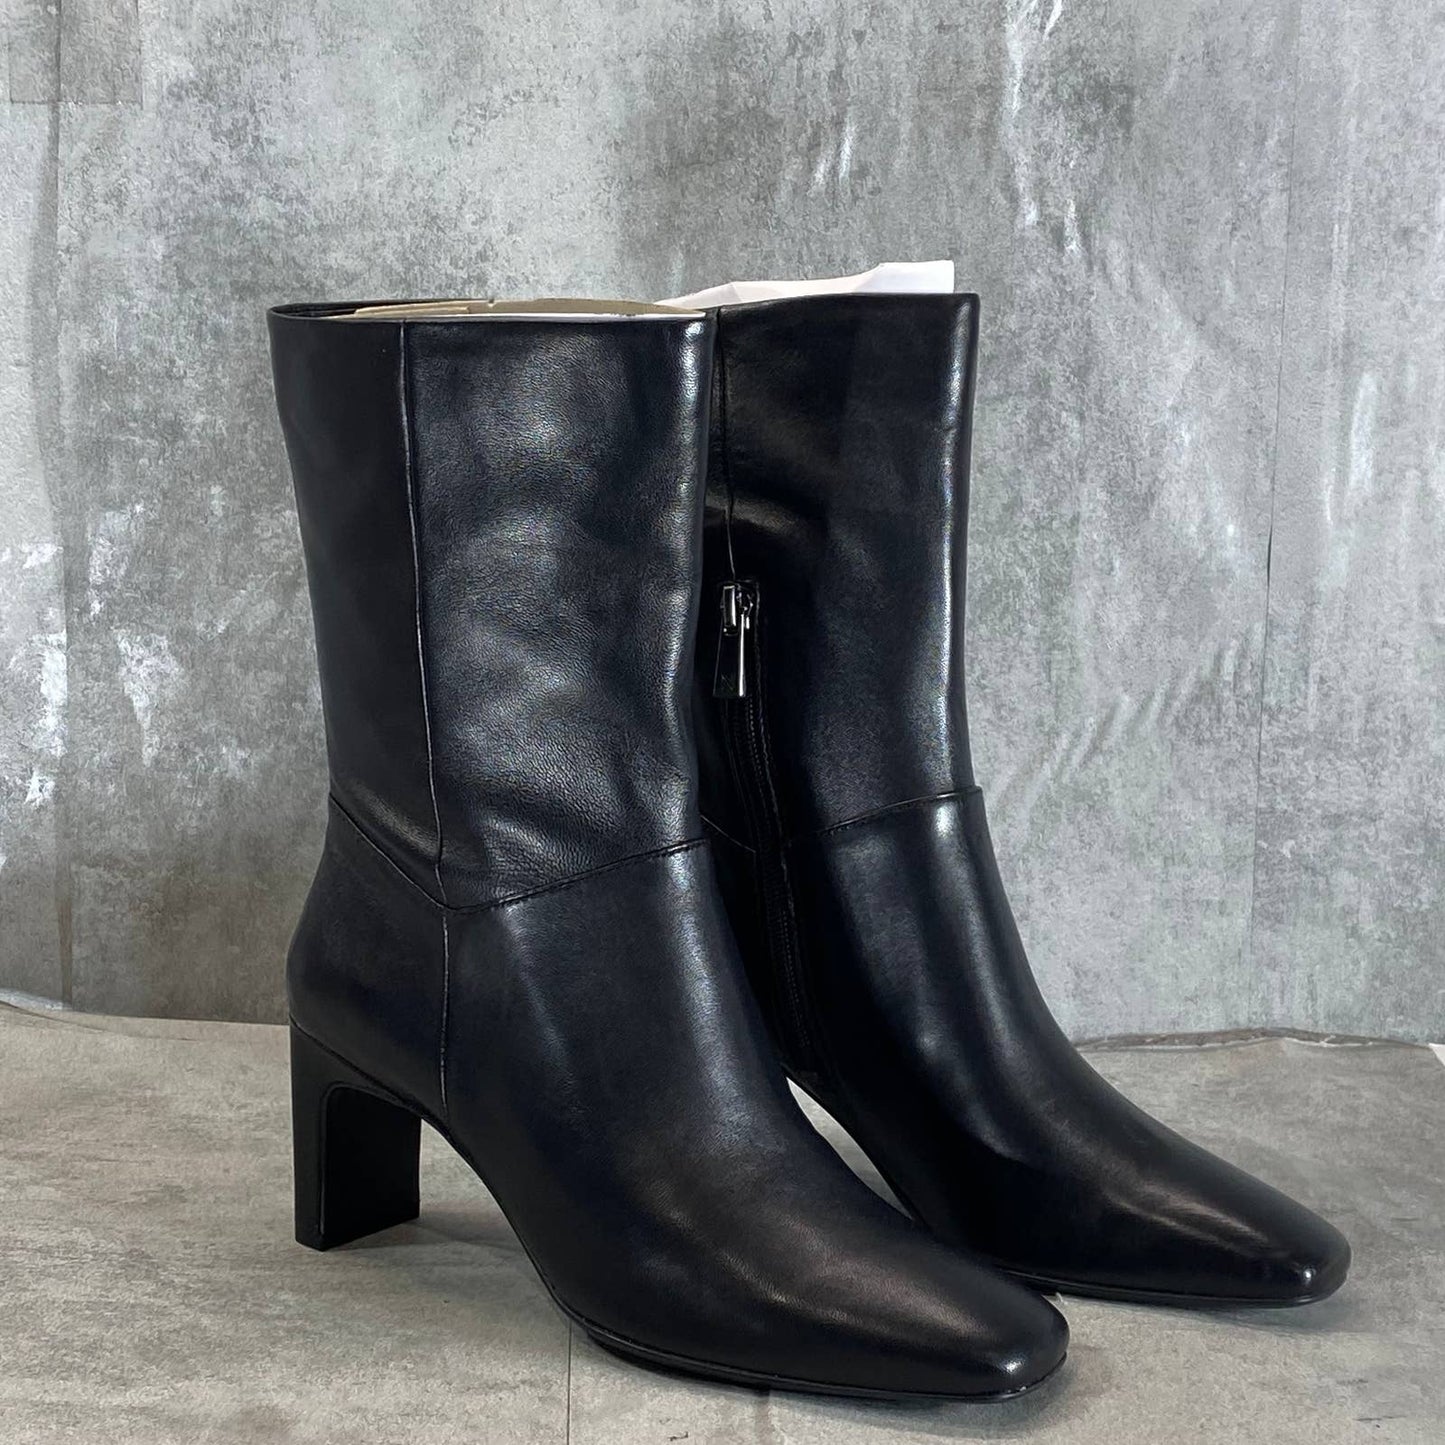 NATURALIZER Women's Black Leather Plat Square-Toe Mid-Calf Booties SZ 6